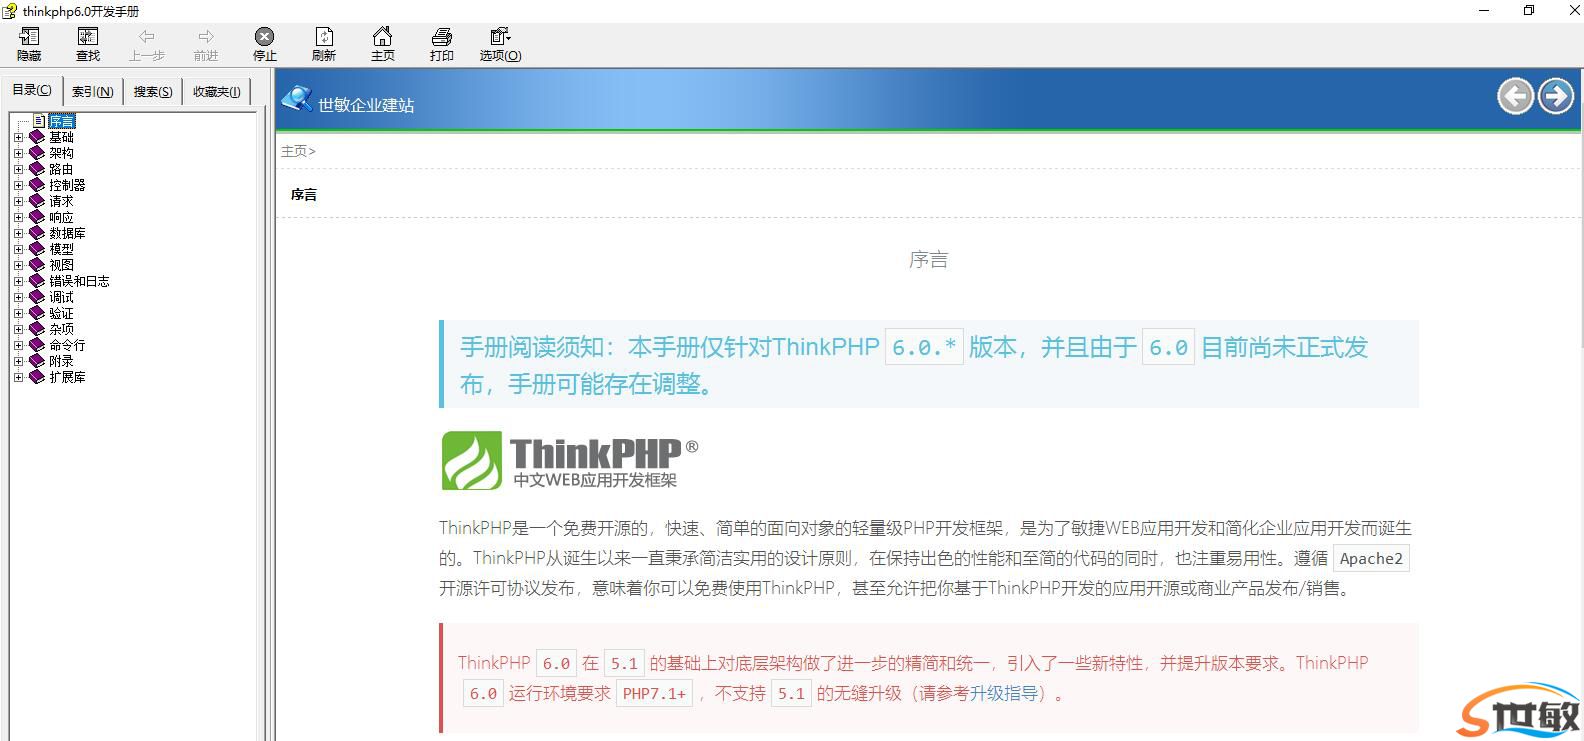 thinkphp 6.0开发手册(图1)